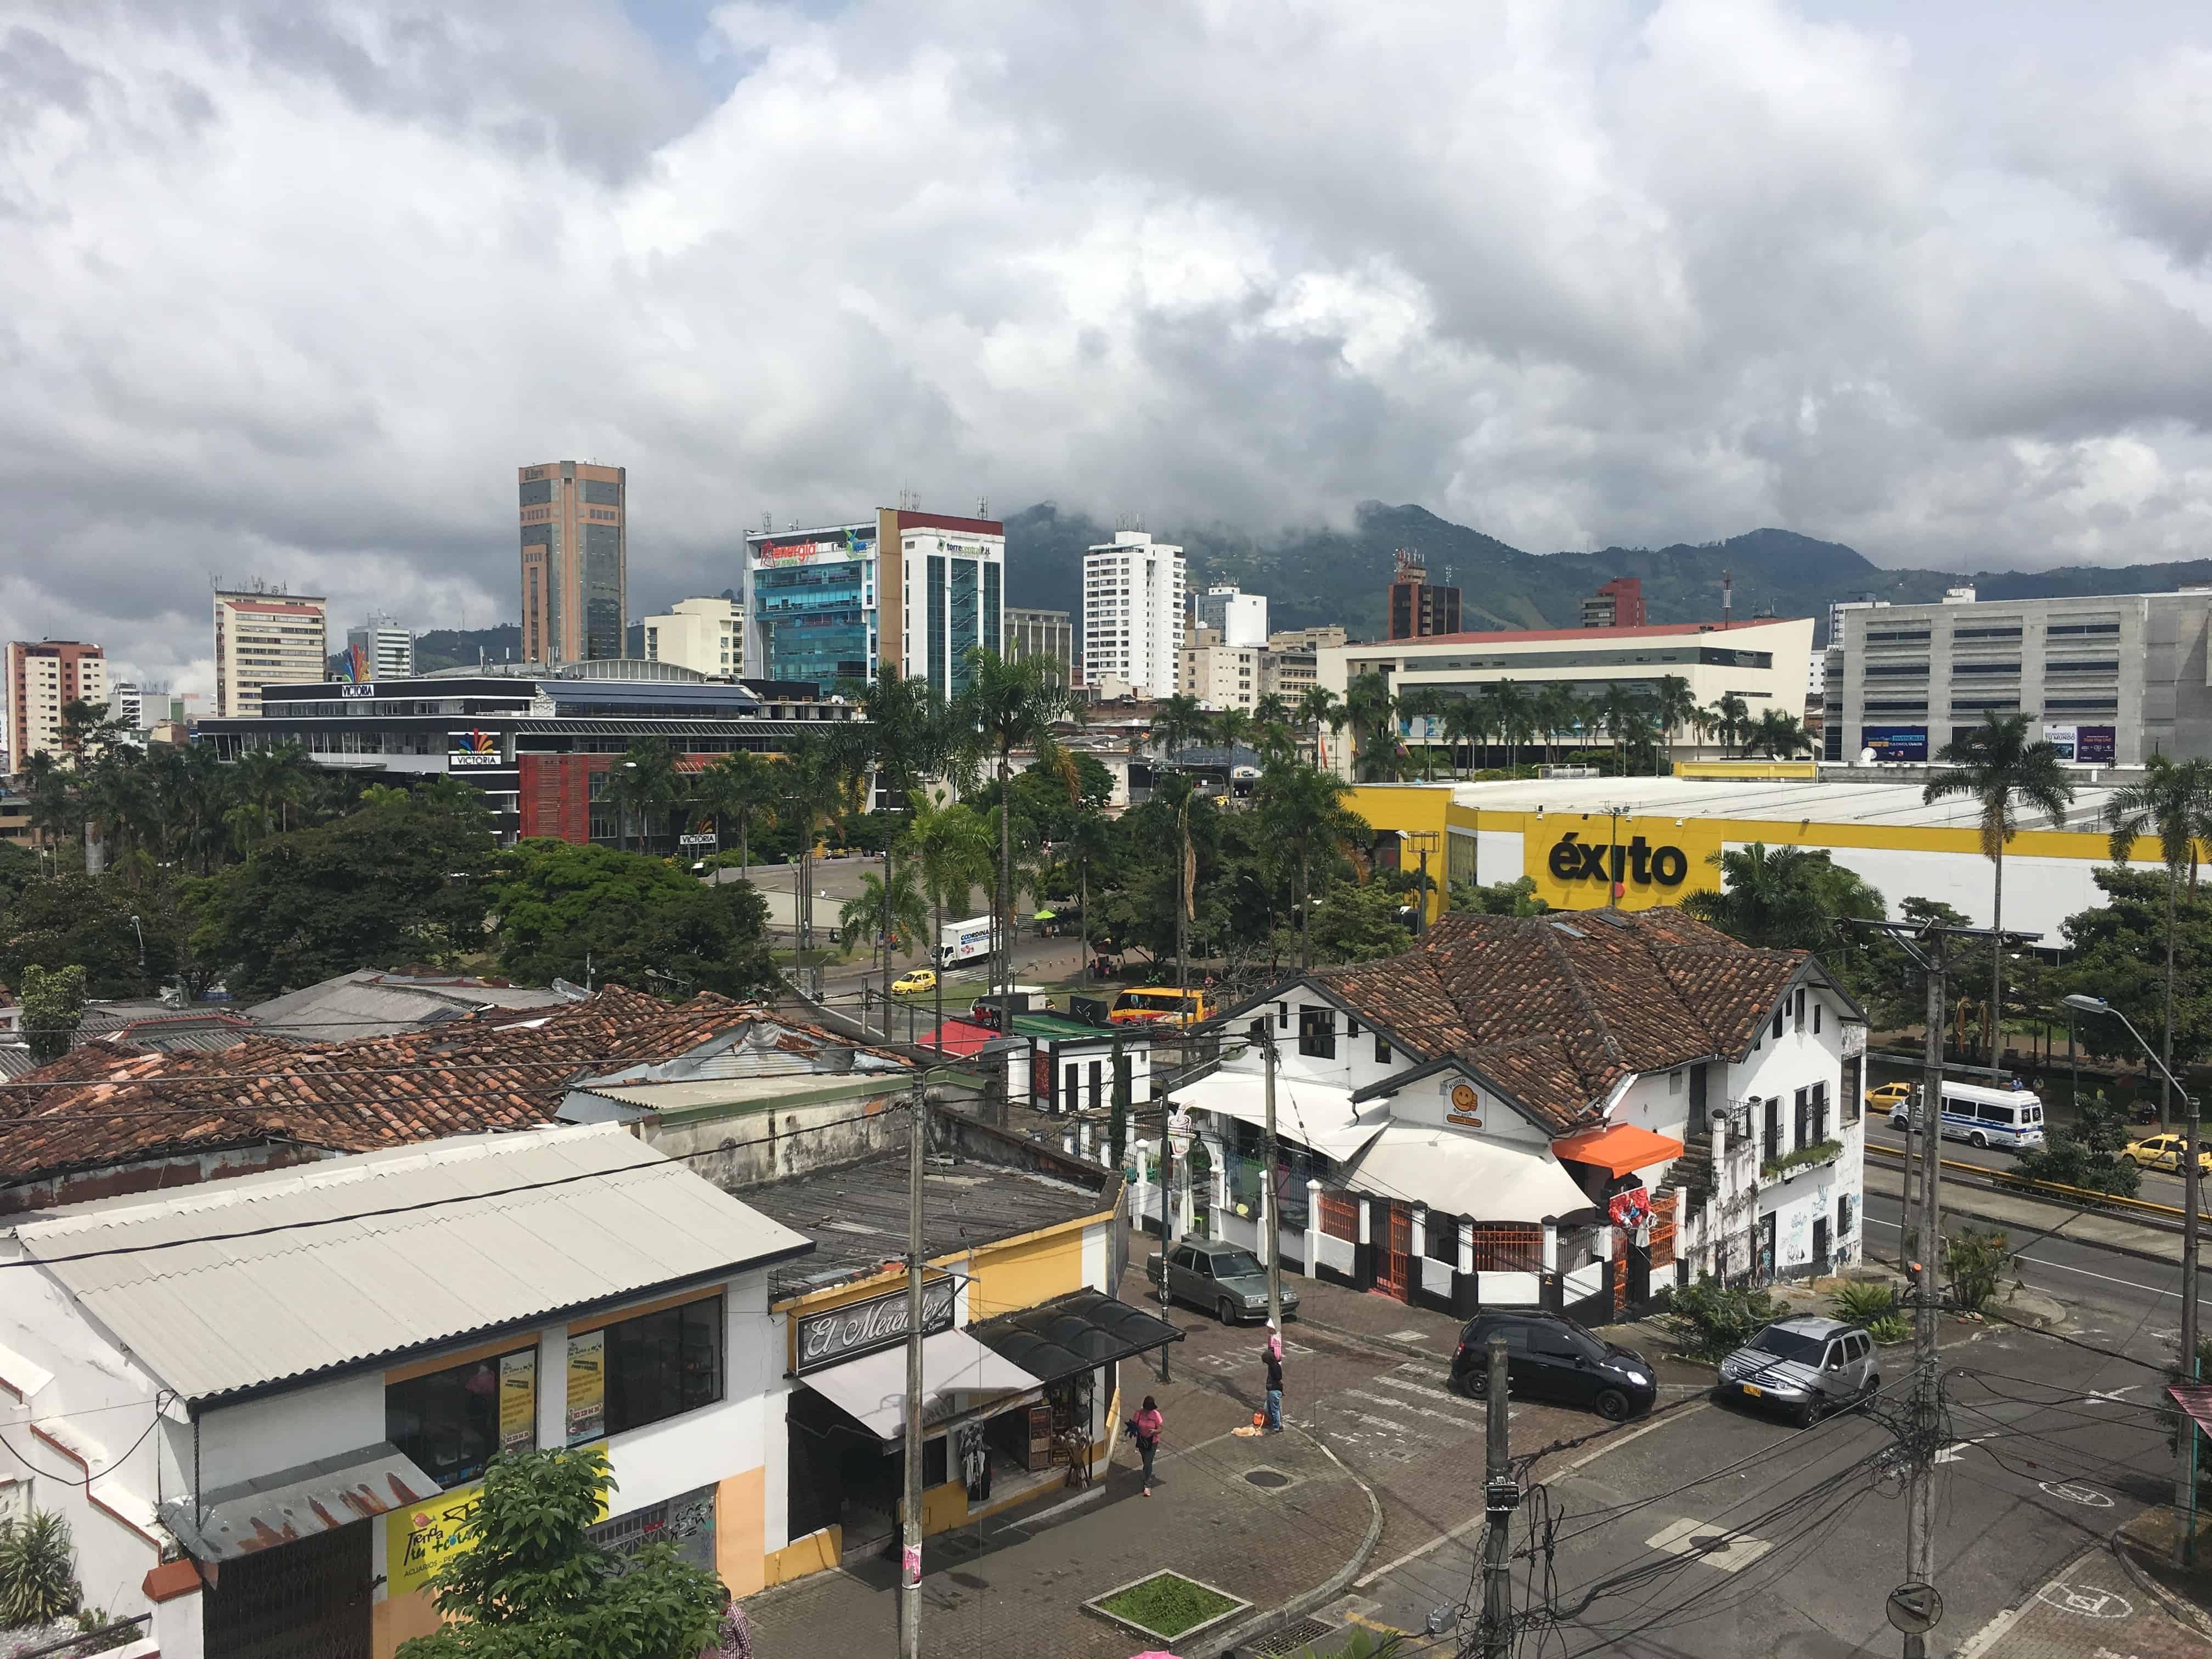 View from Hotel Castilla Real in Pereira, Risaralda, Colombia